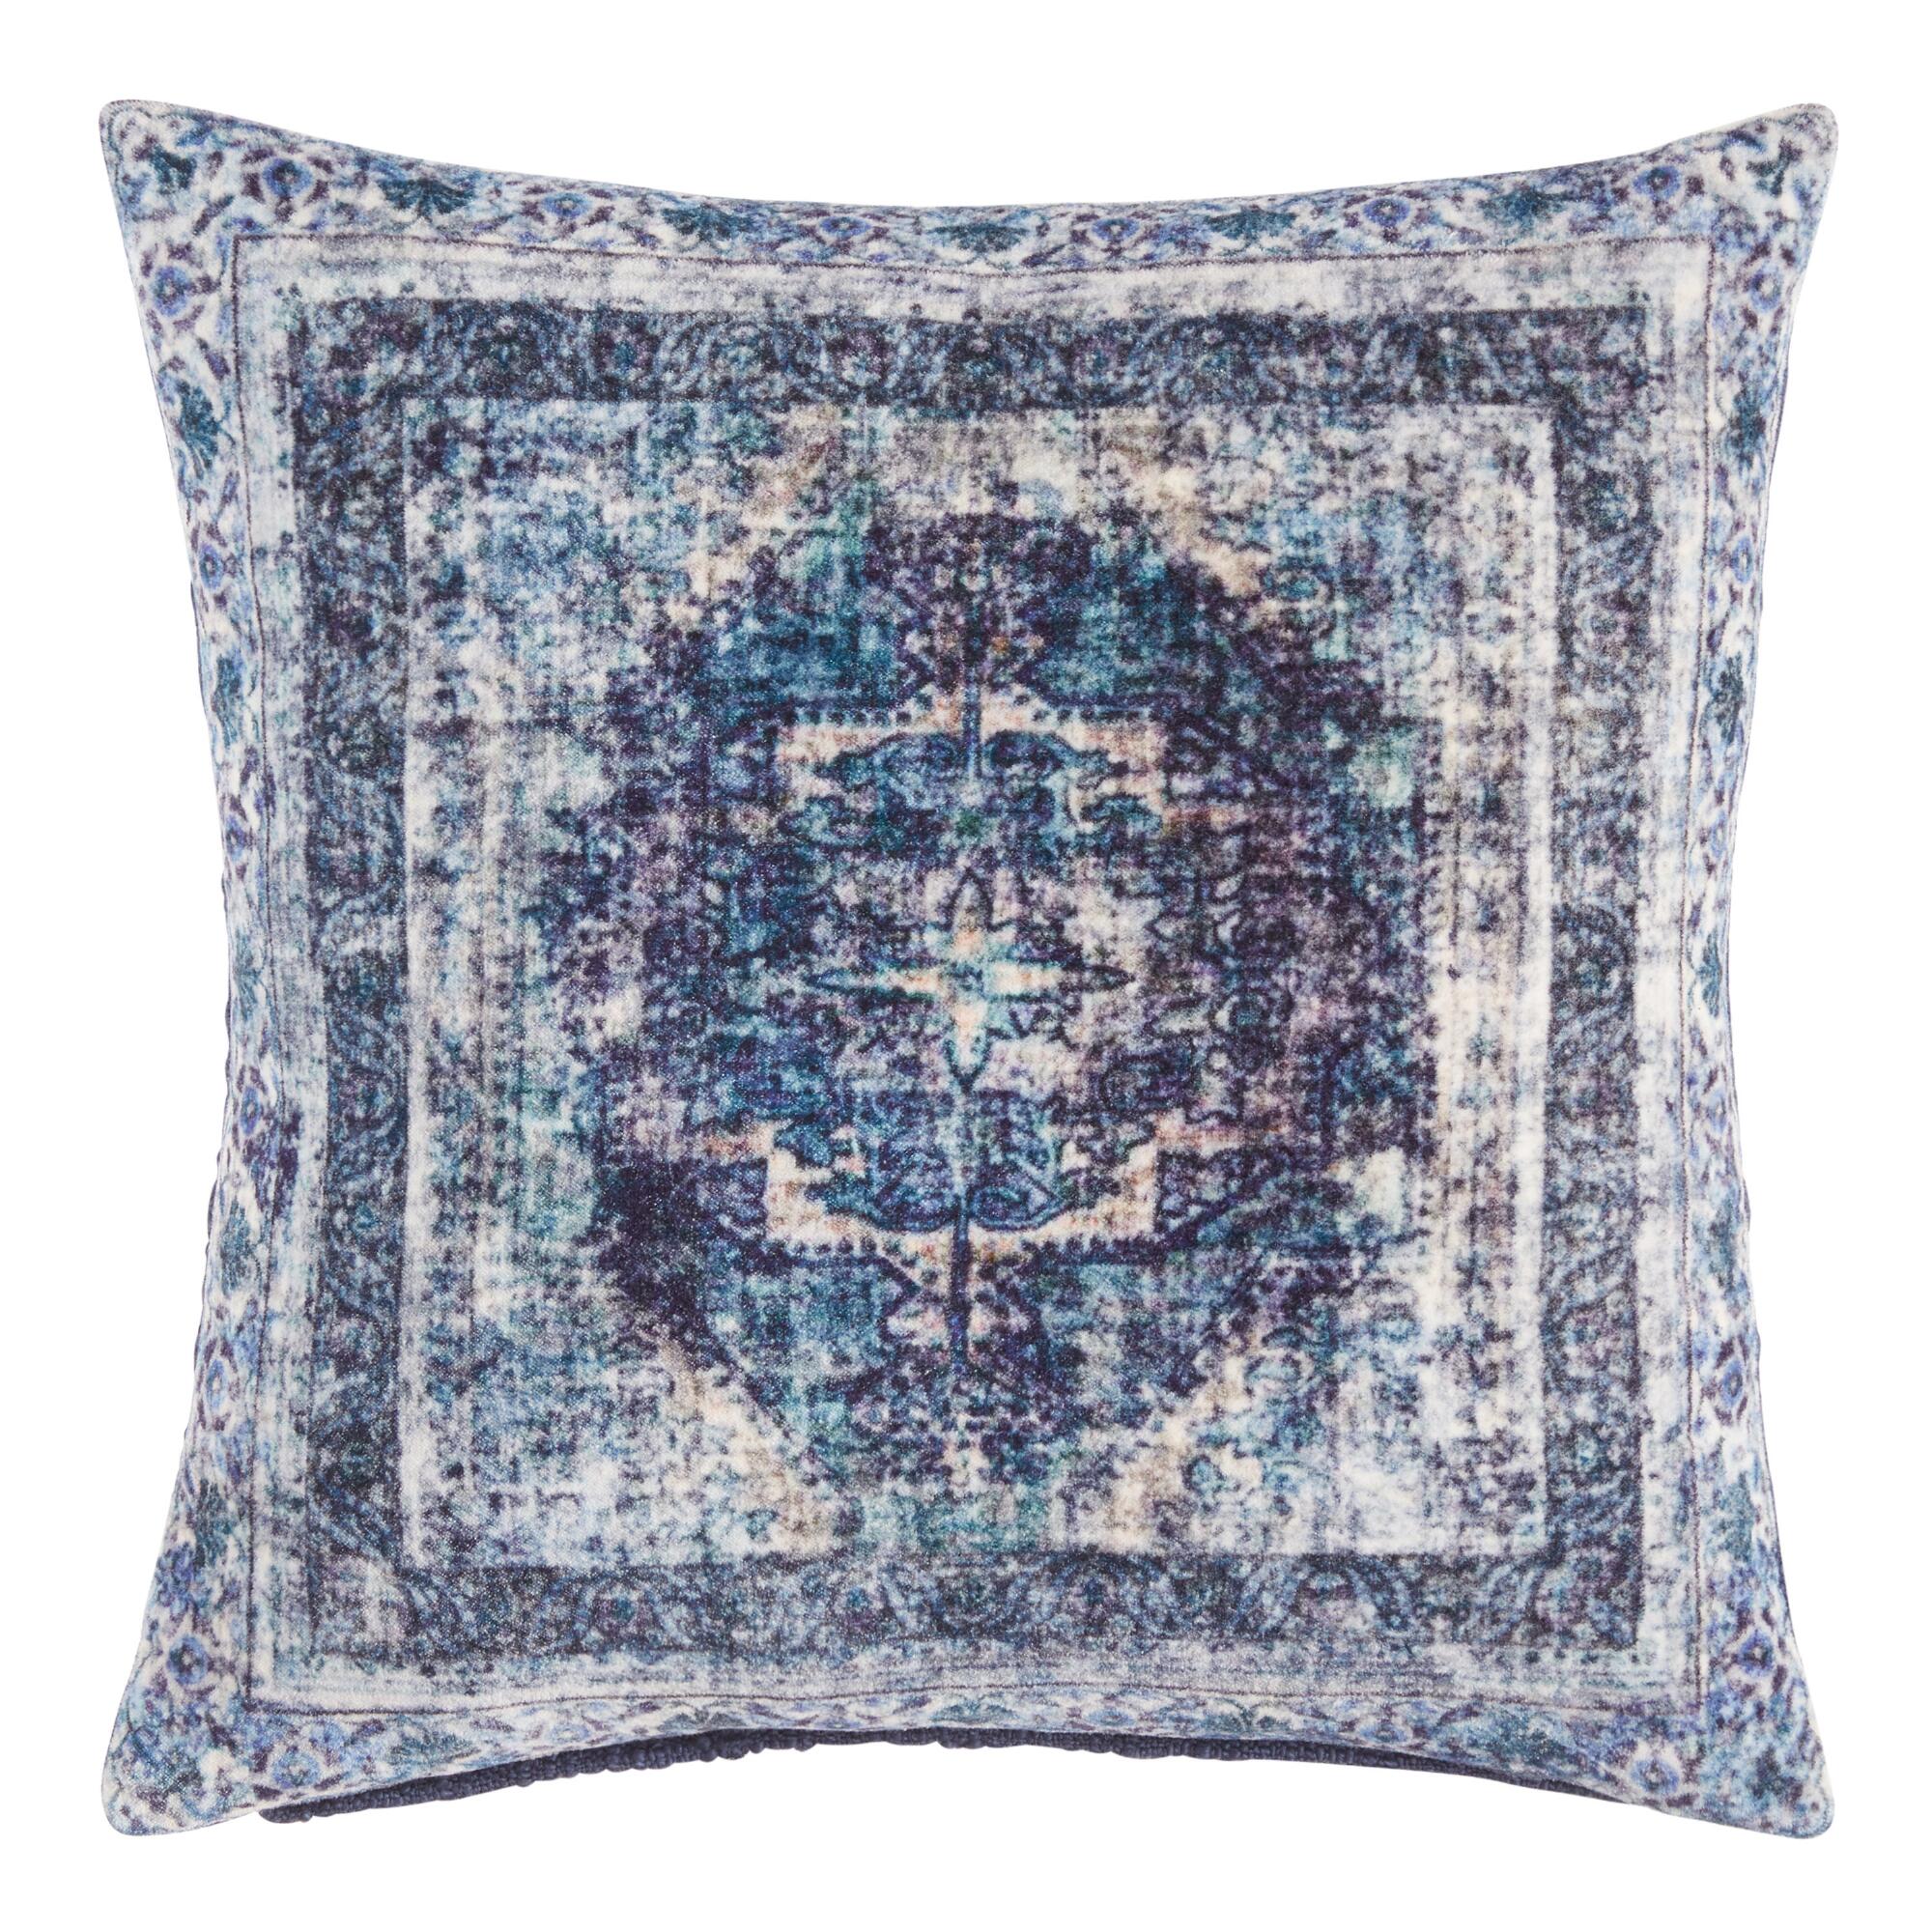 Indigo Distressed Persian Rug Print Throw Pillow: Blue - Cotton - 18" Square by World Market